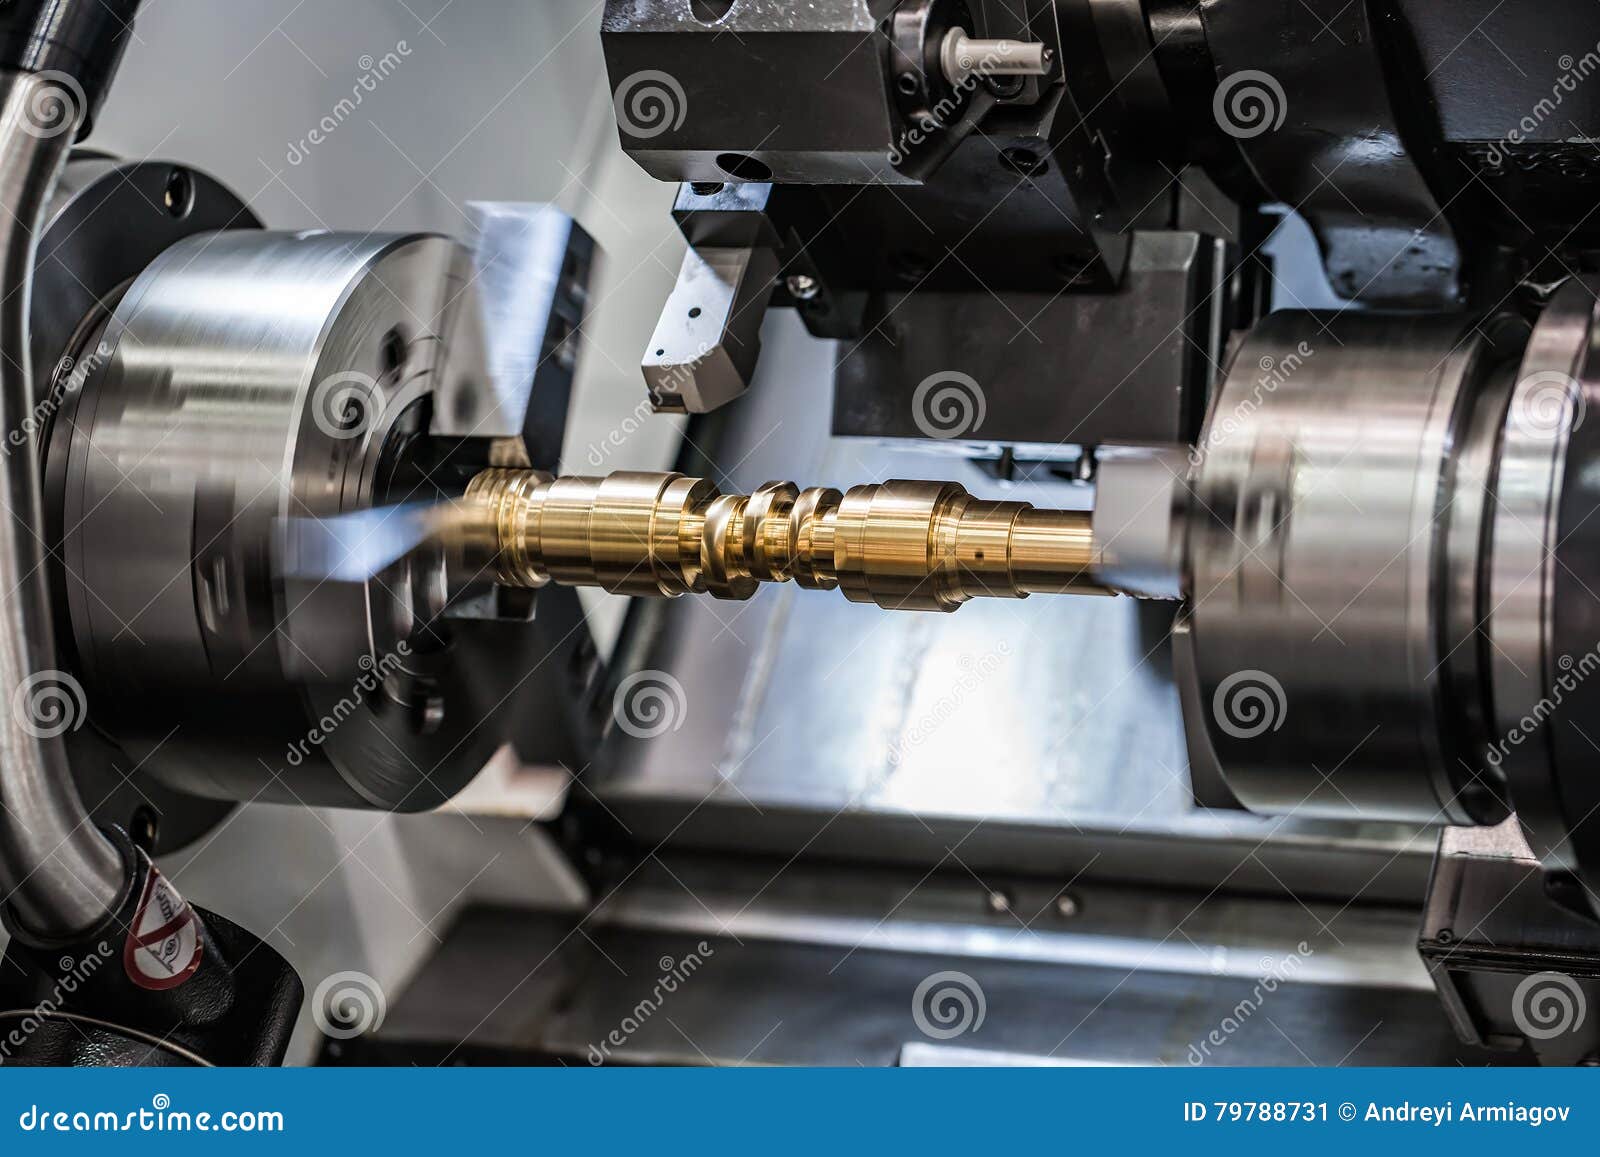 metalworking cnc milling lathe machine.